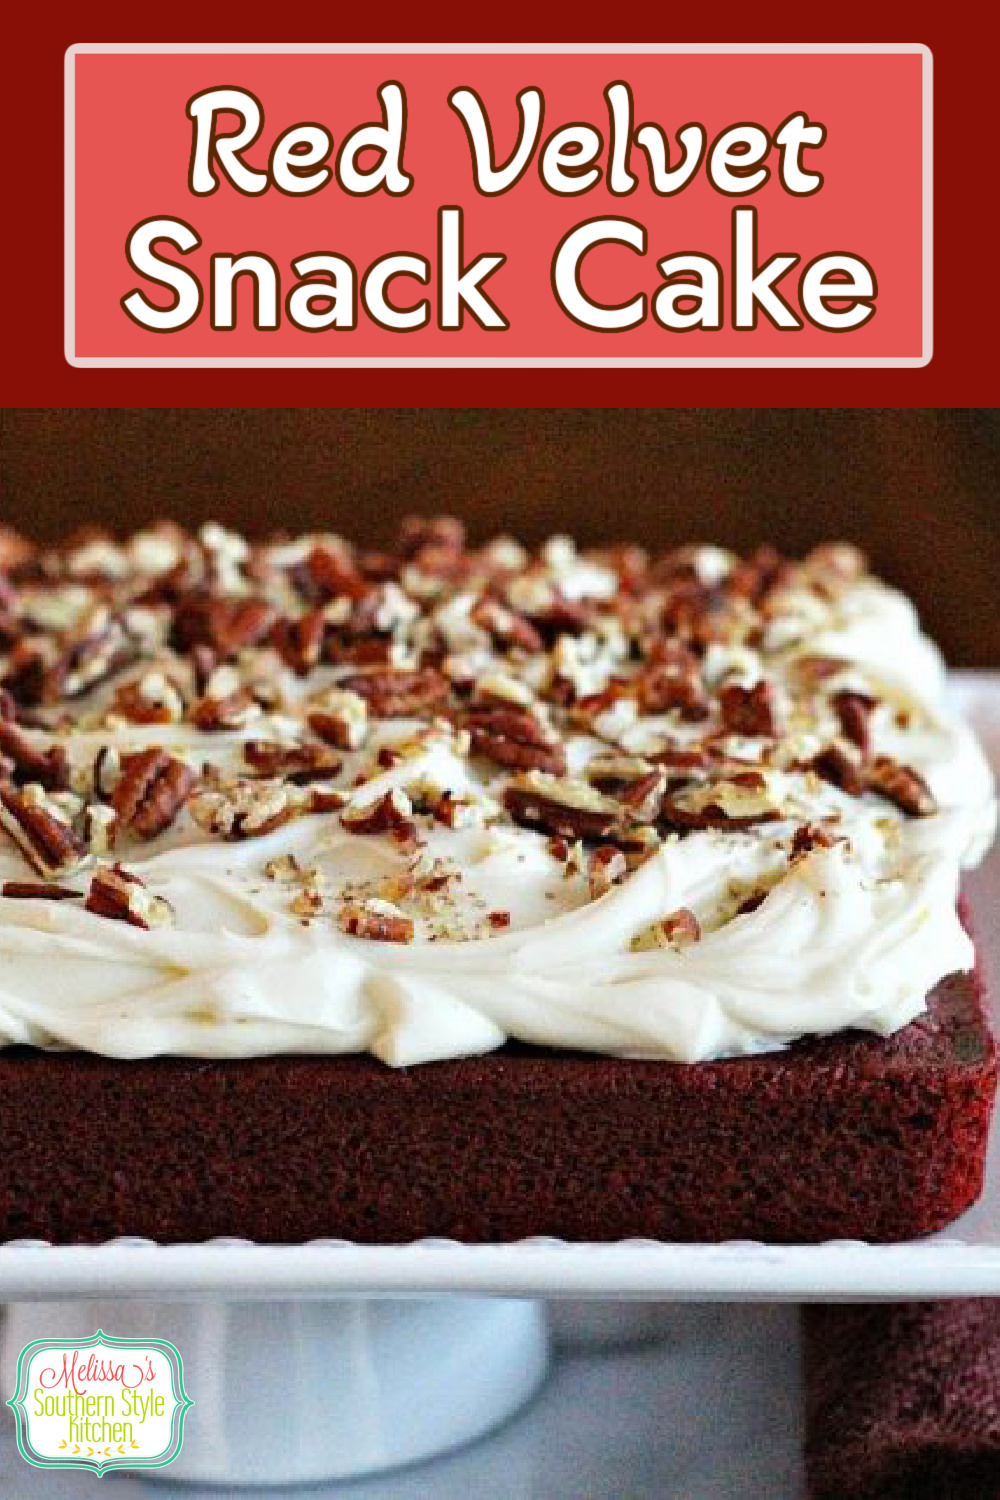 This single layer Red Velvet Snack Cake makes the perfect small batch dessert #redvelvet #valentinesday #redvelvetcake #cakerecipes #chocolatecake #southernfood #southerndesserts